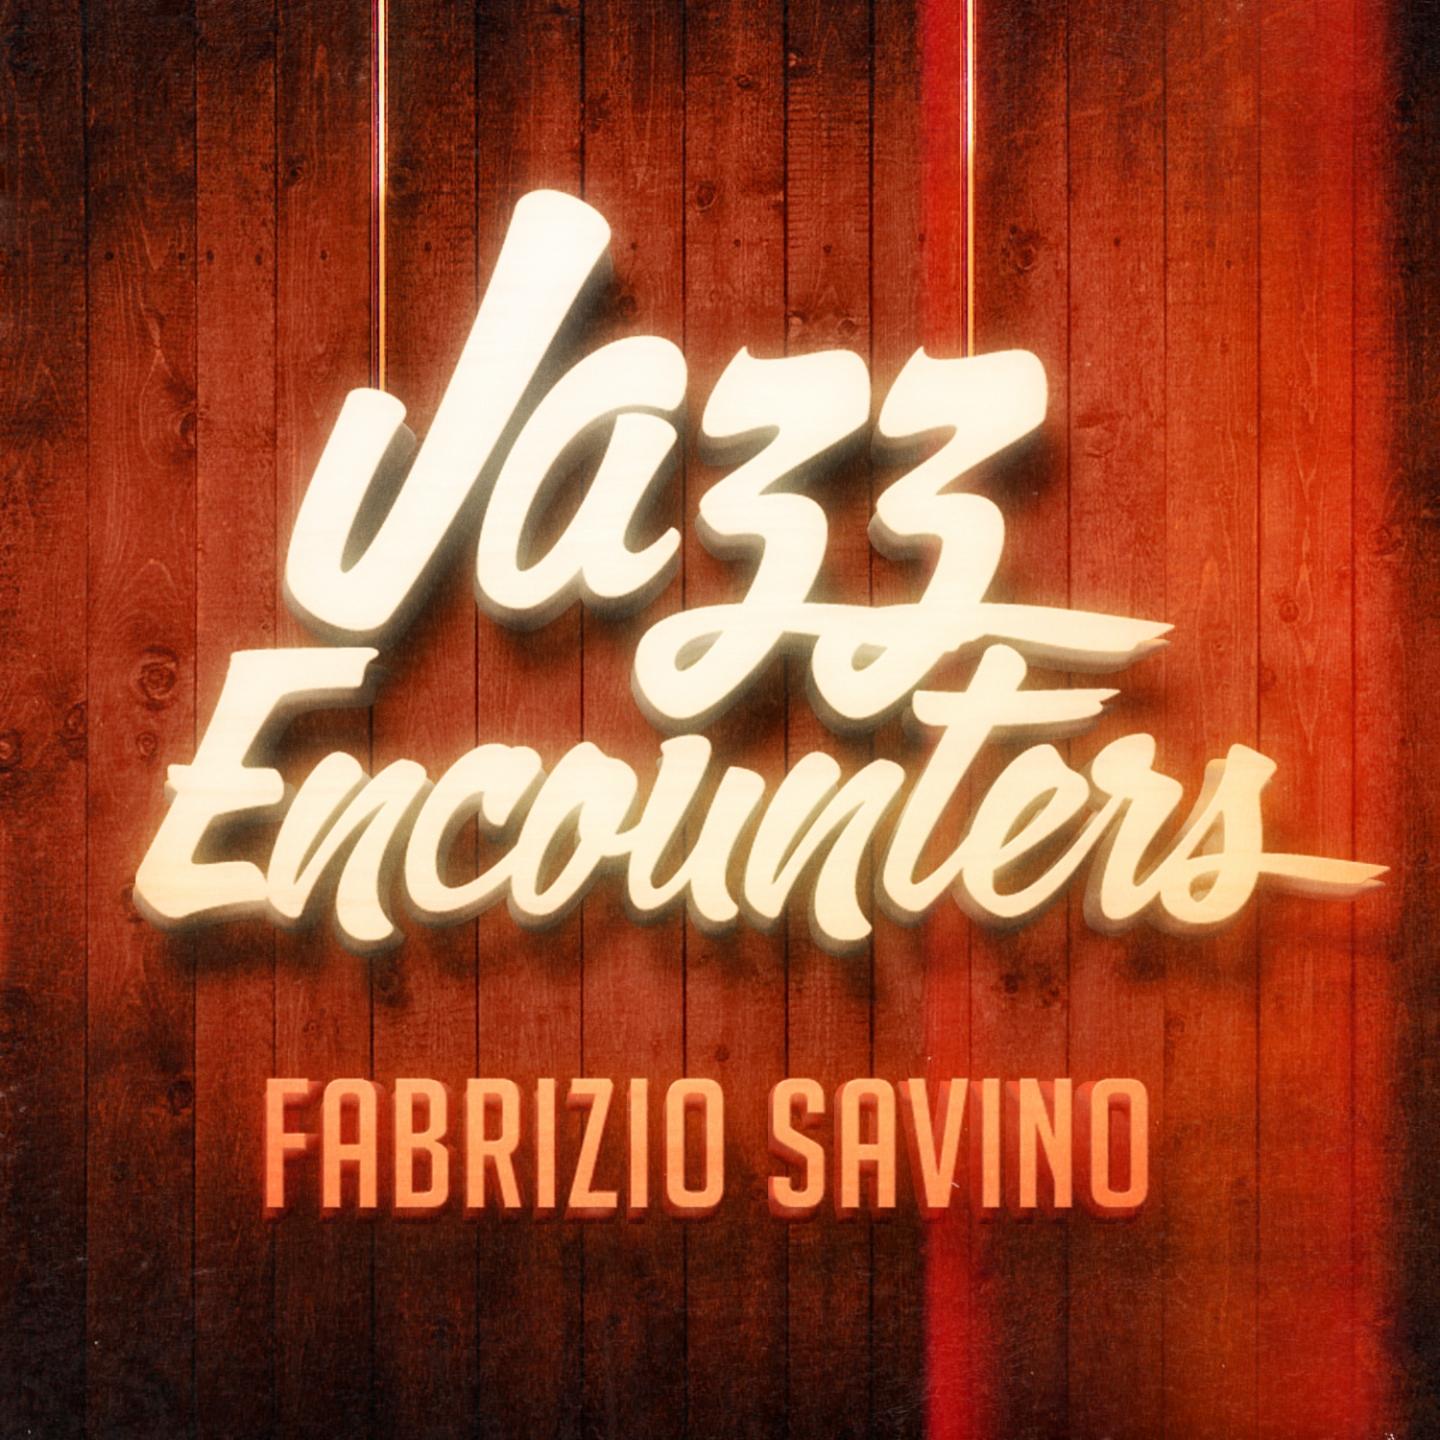 Jazz Guitar Elegance by Fabrizio Savino (The Jazz Encounters Collection)